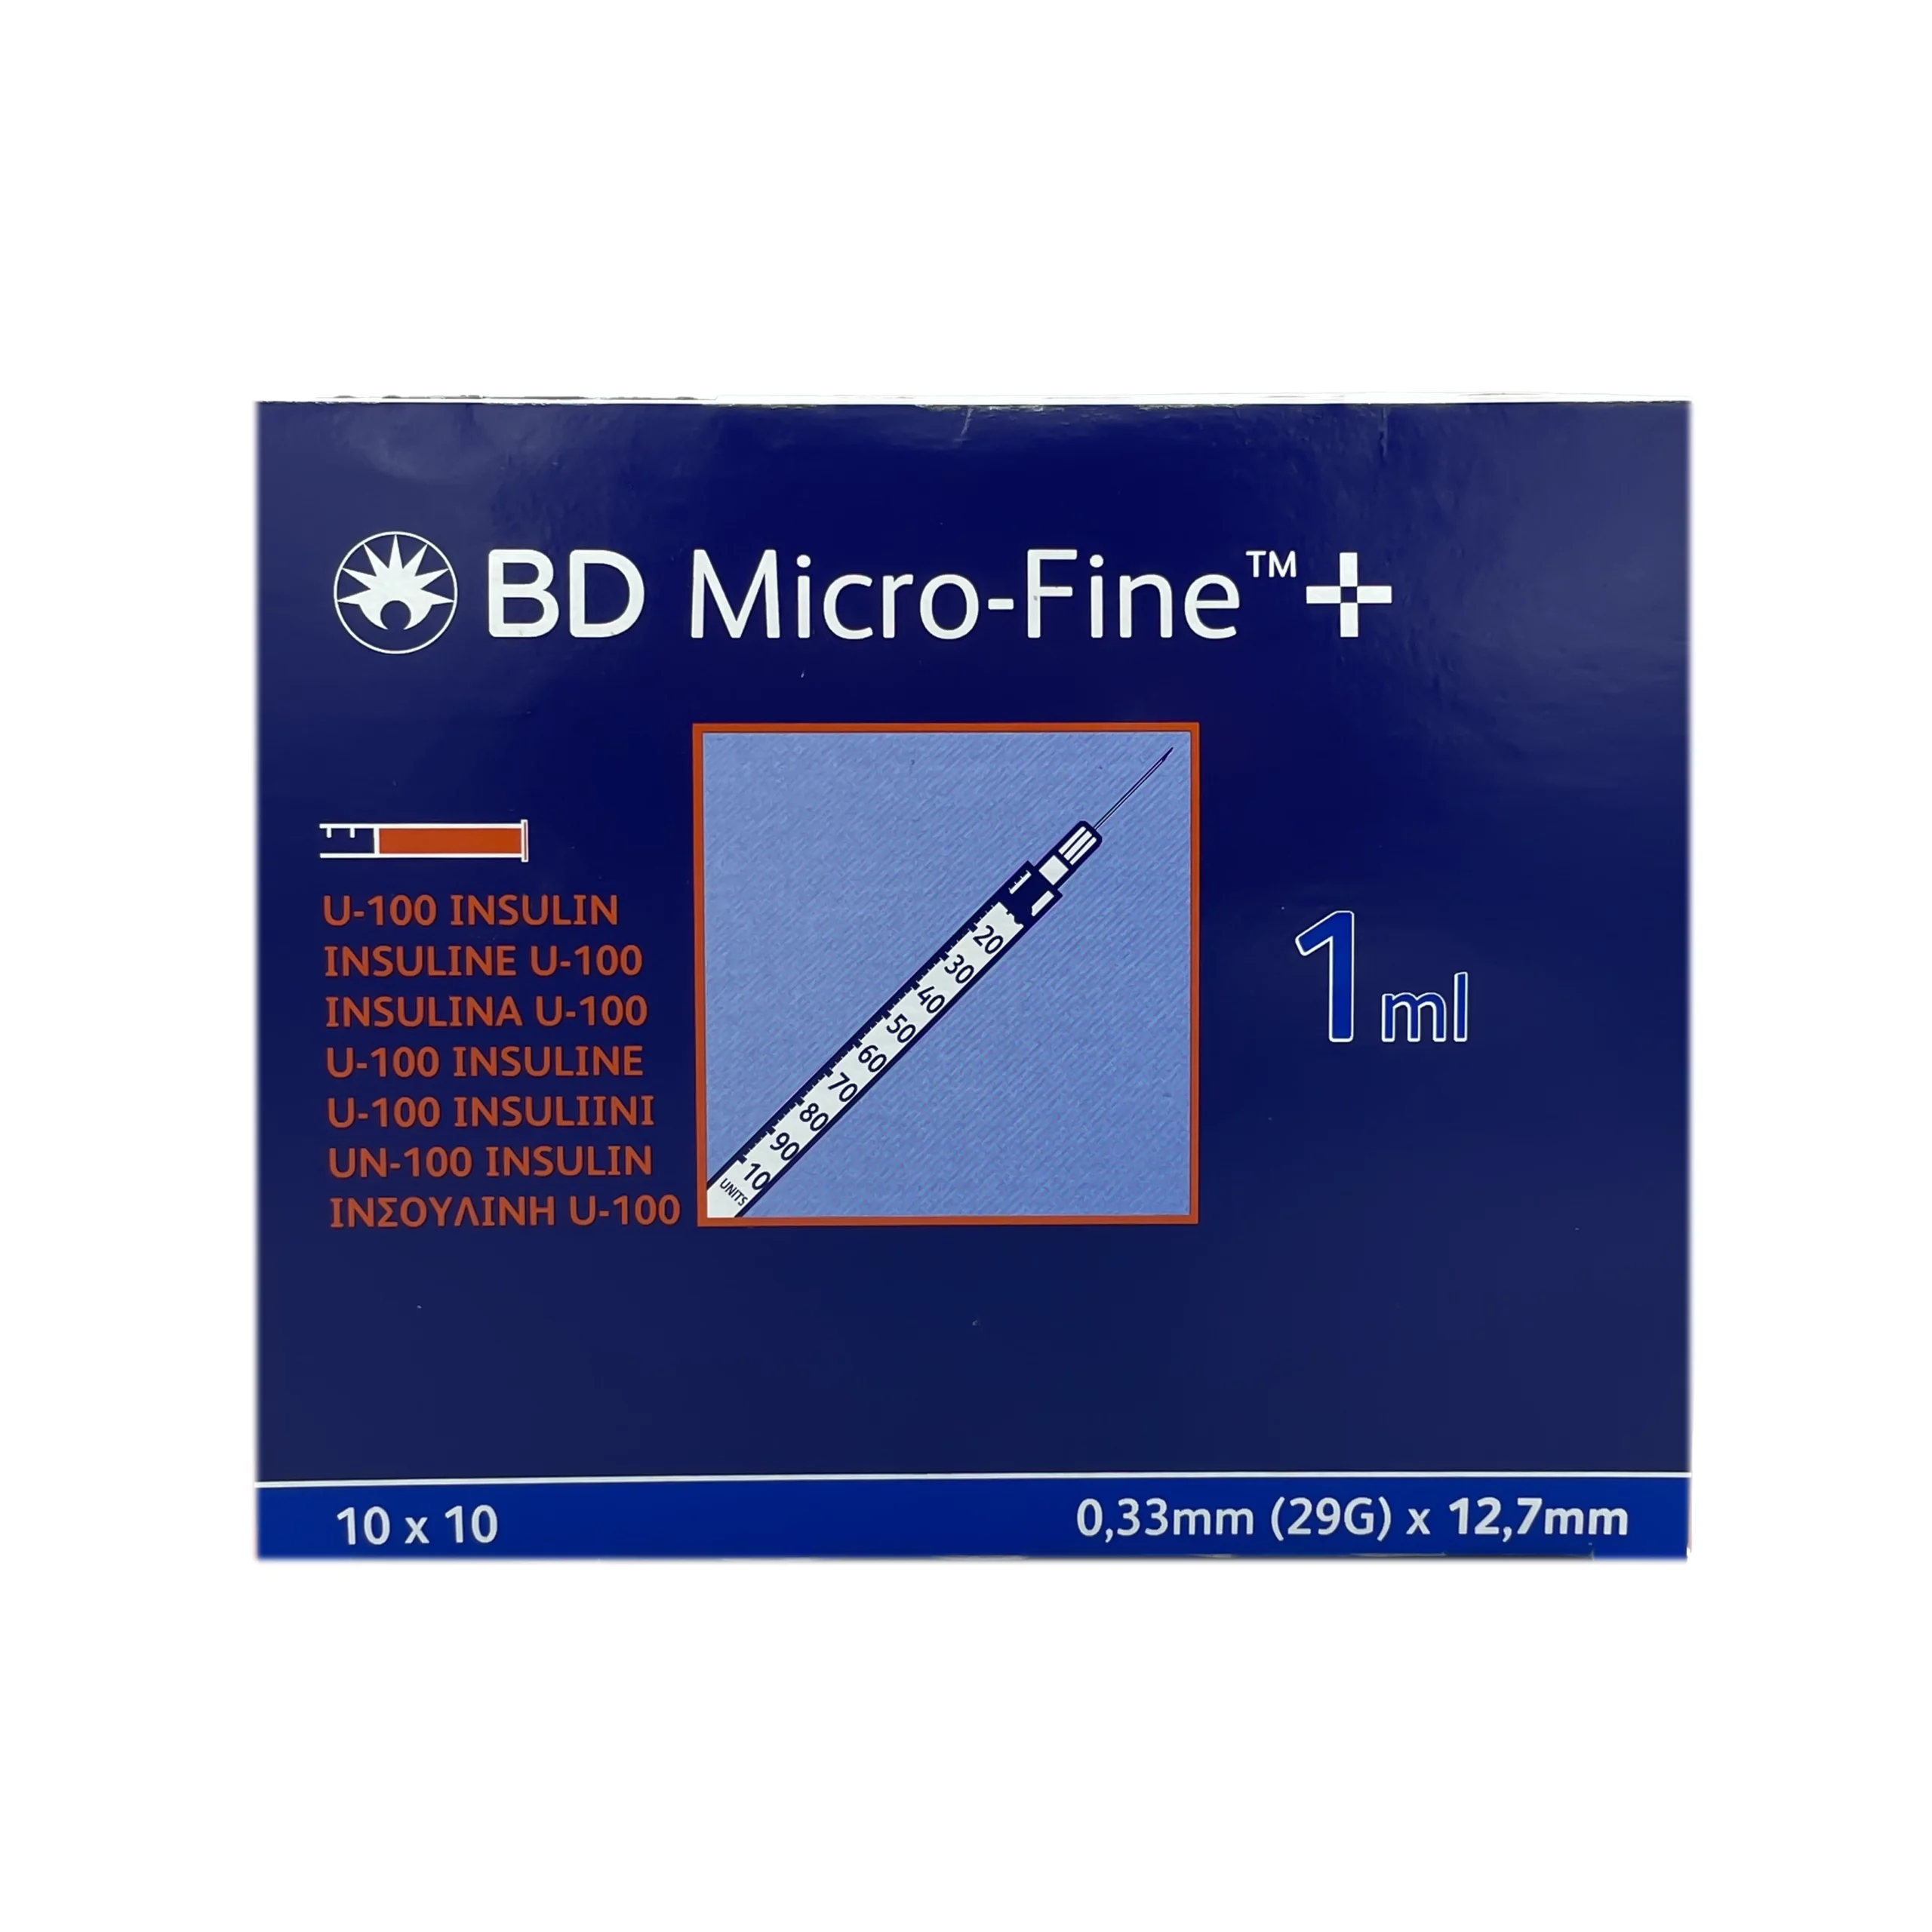 BD Microfine Insulin Syringes